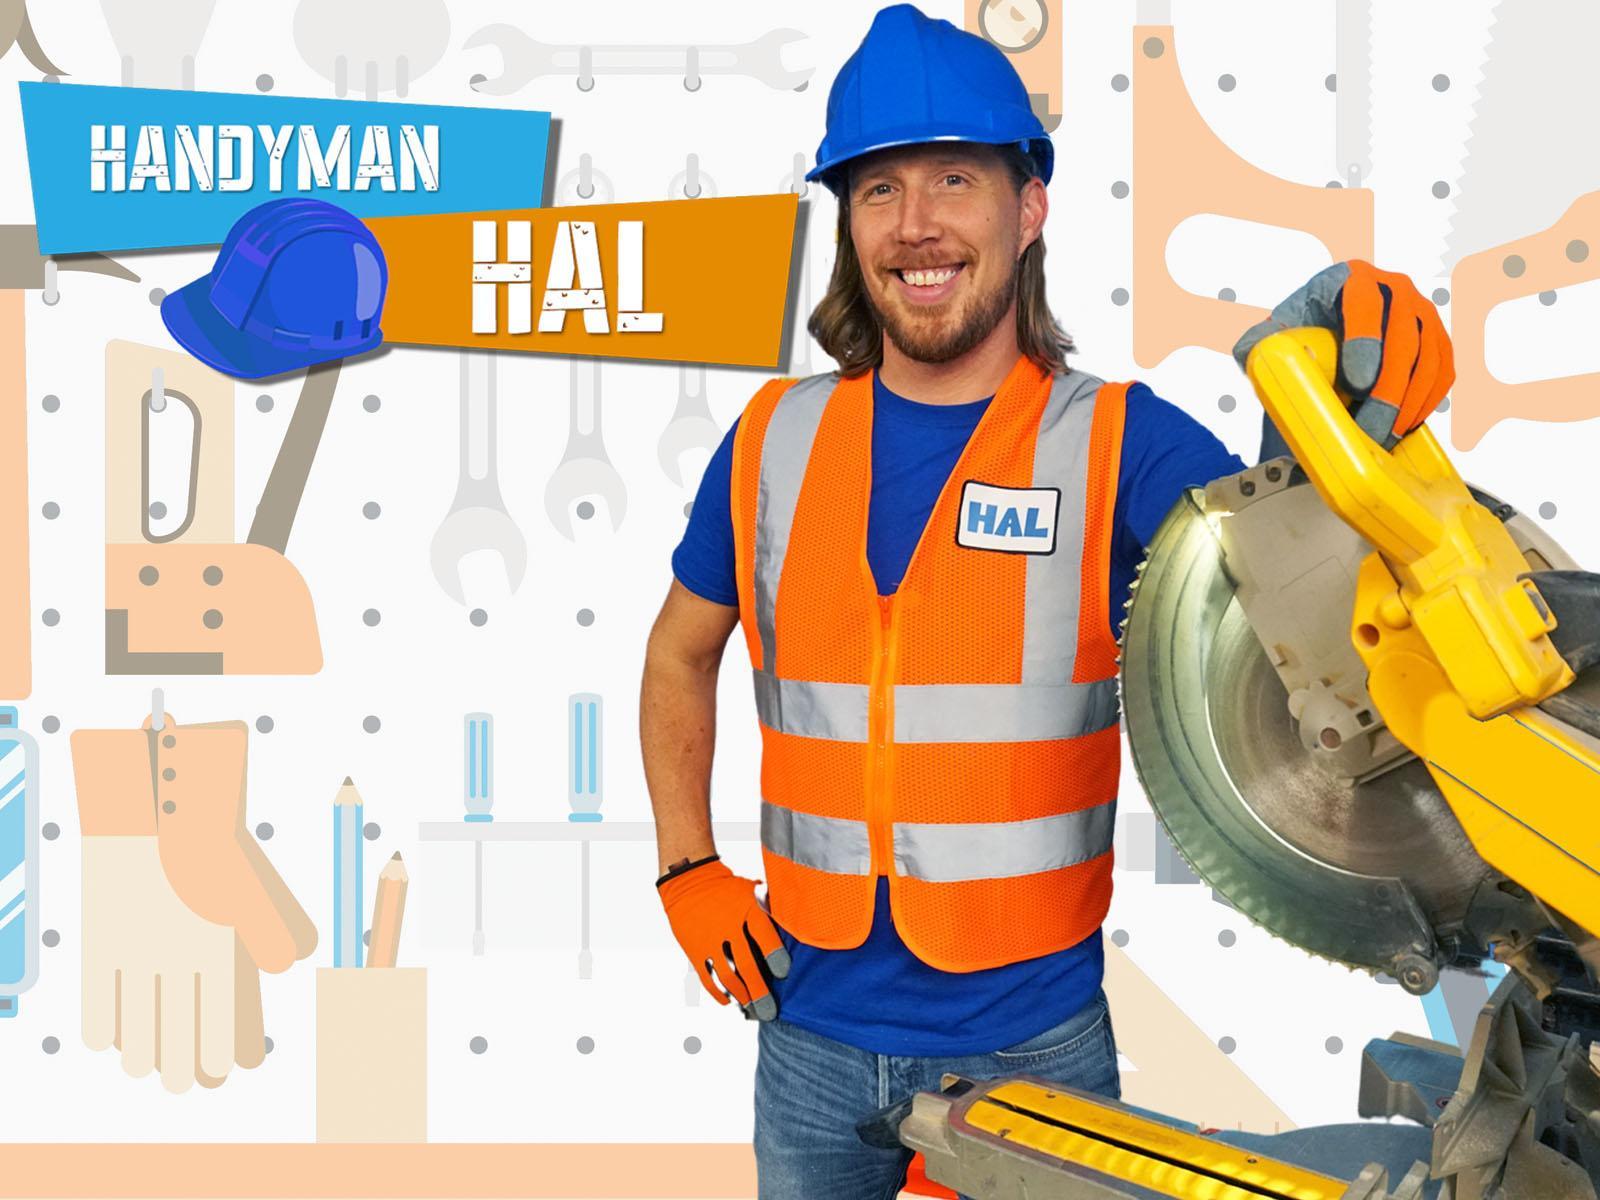 Who is Handyman Hal